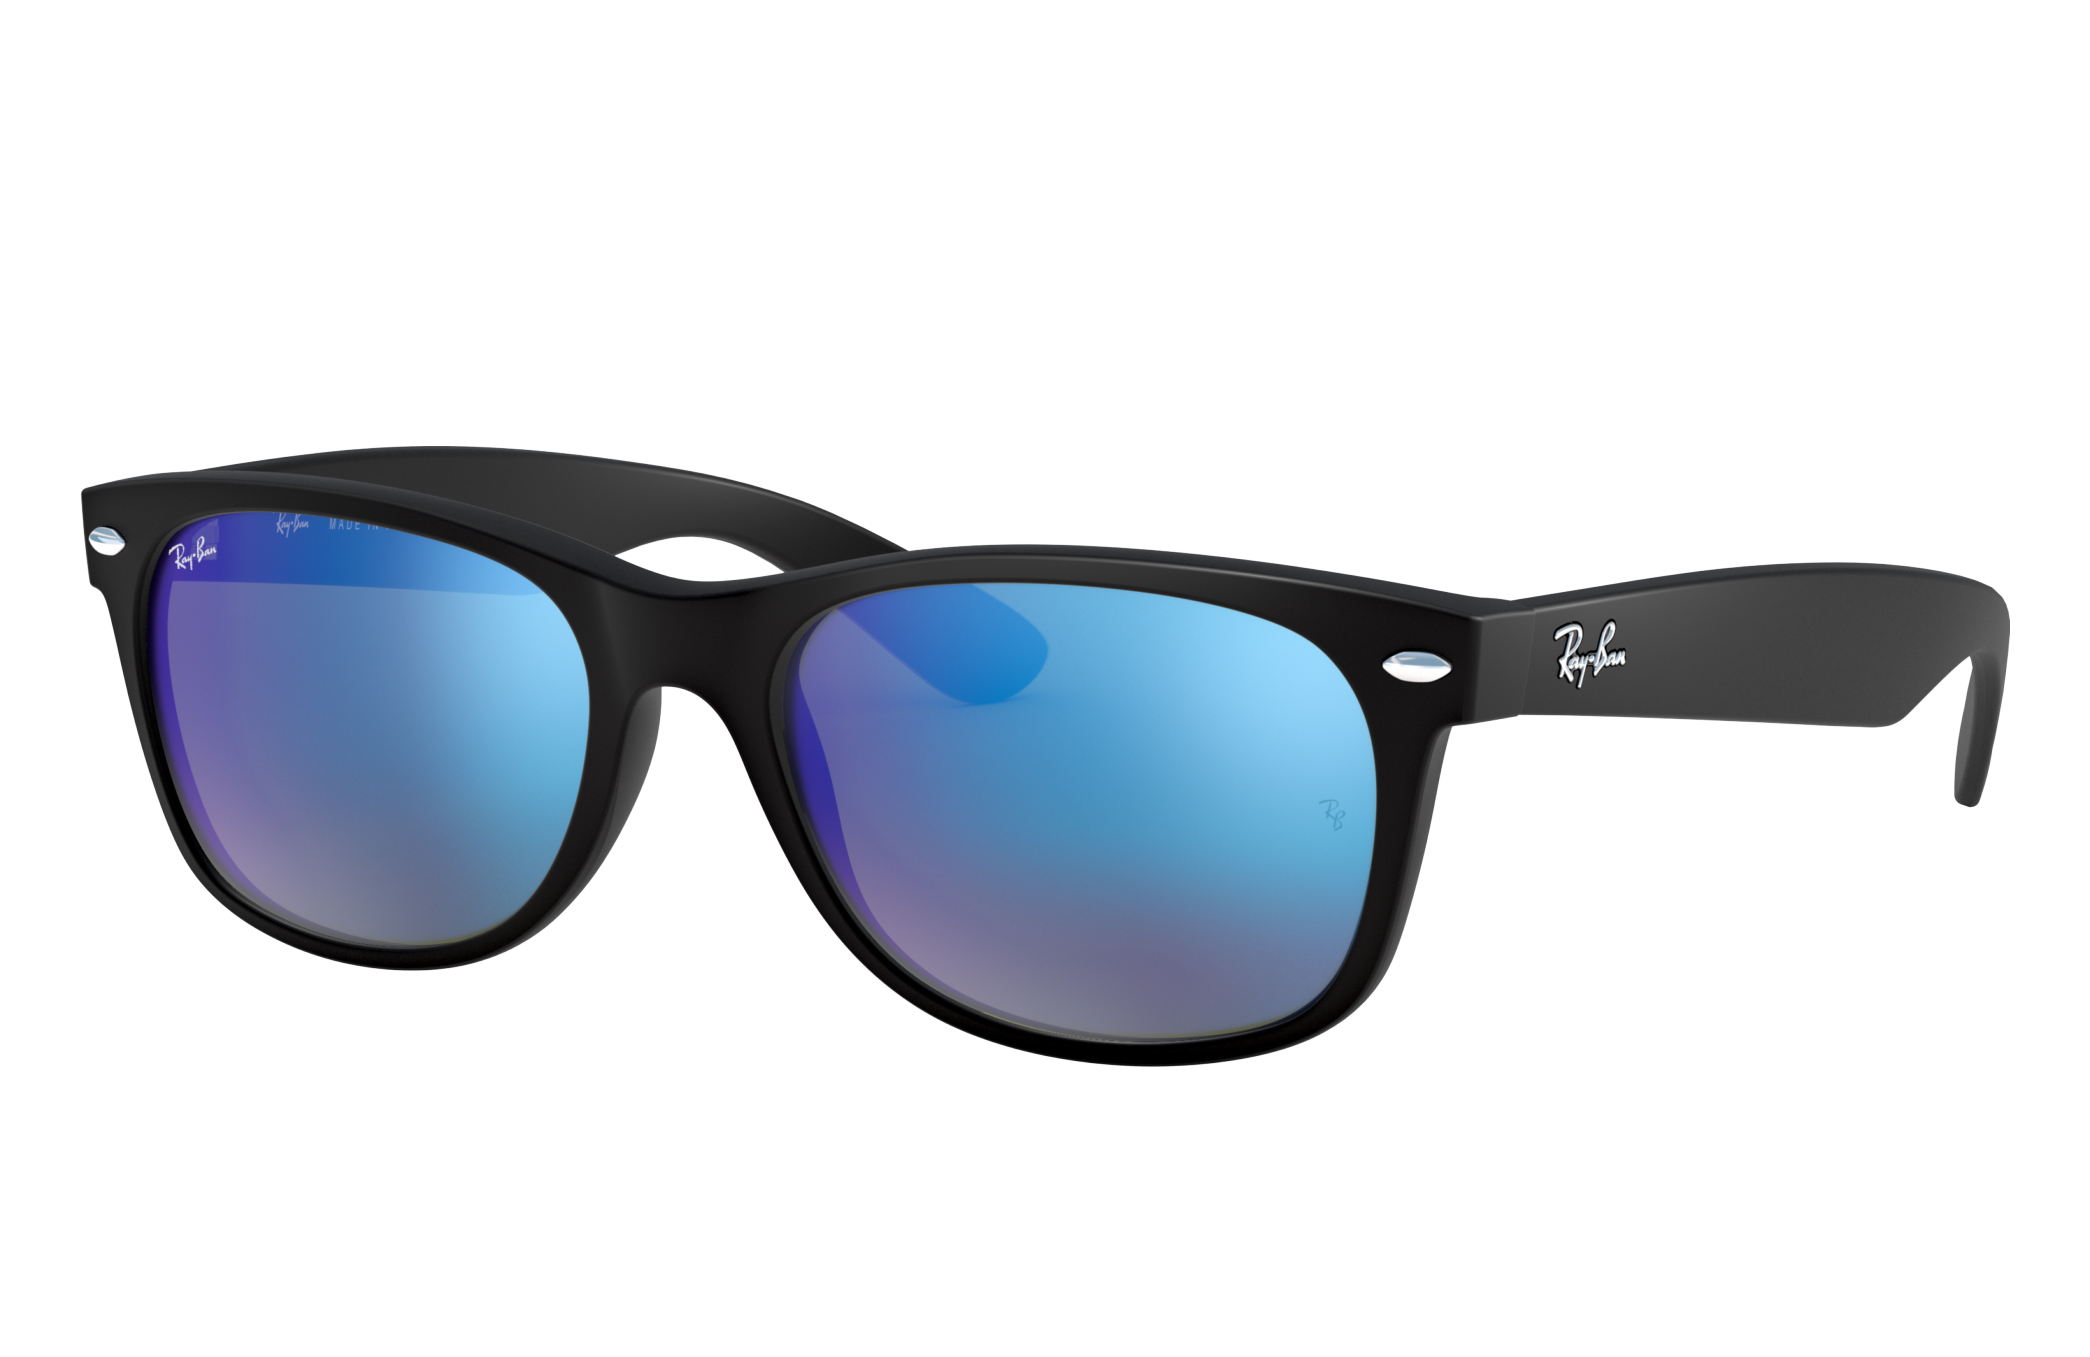 Wayfarer Flash Sunglasses in Black and Blue